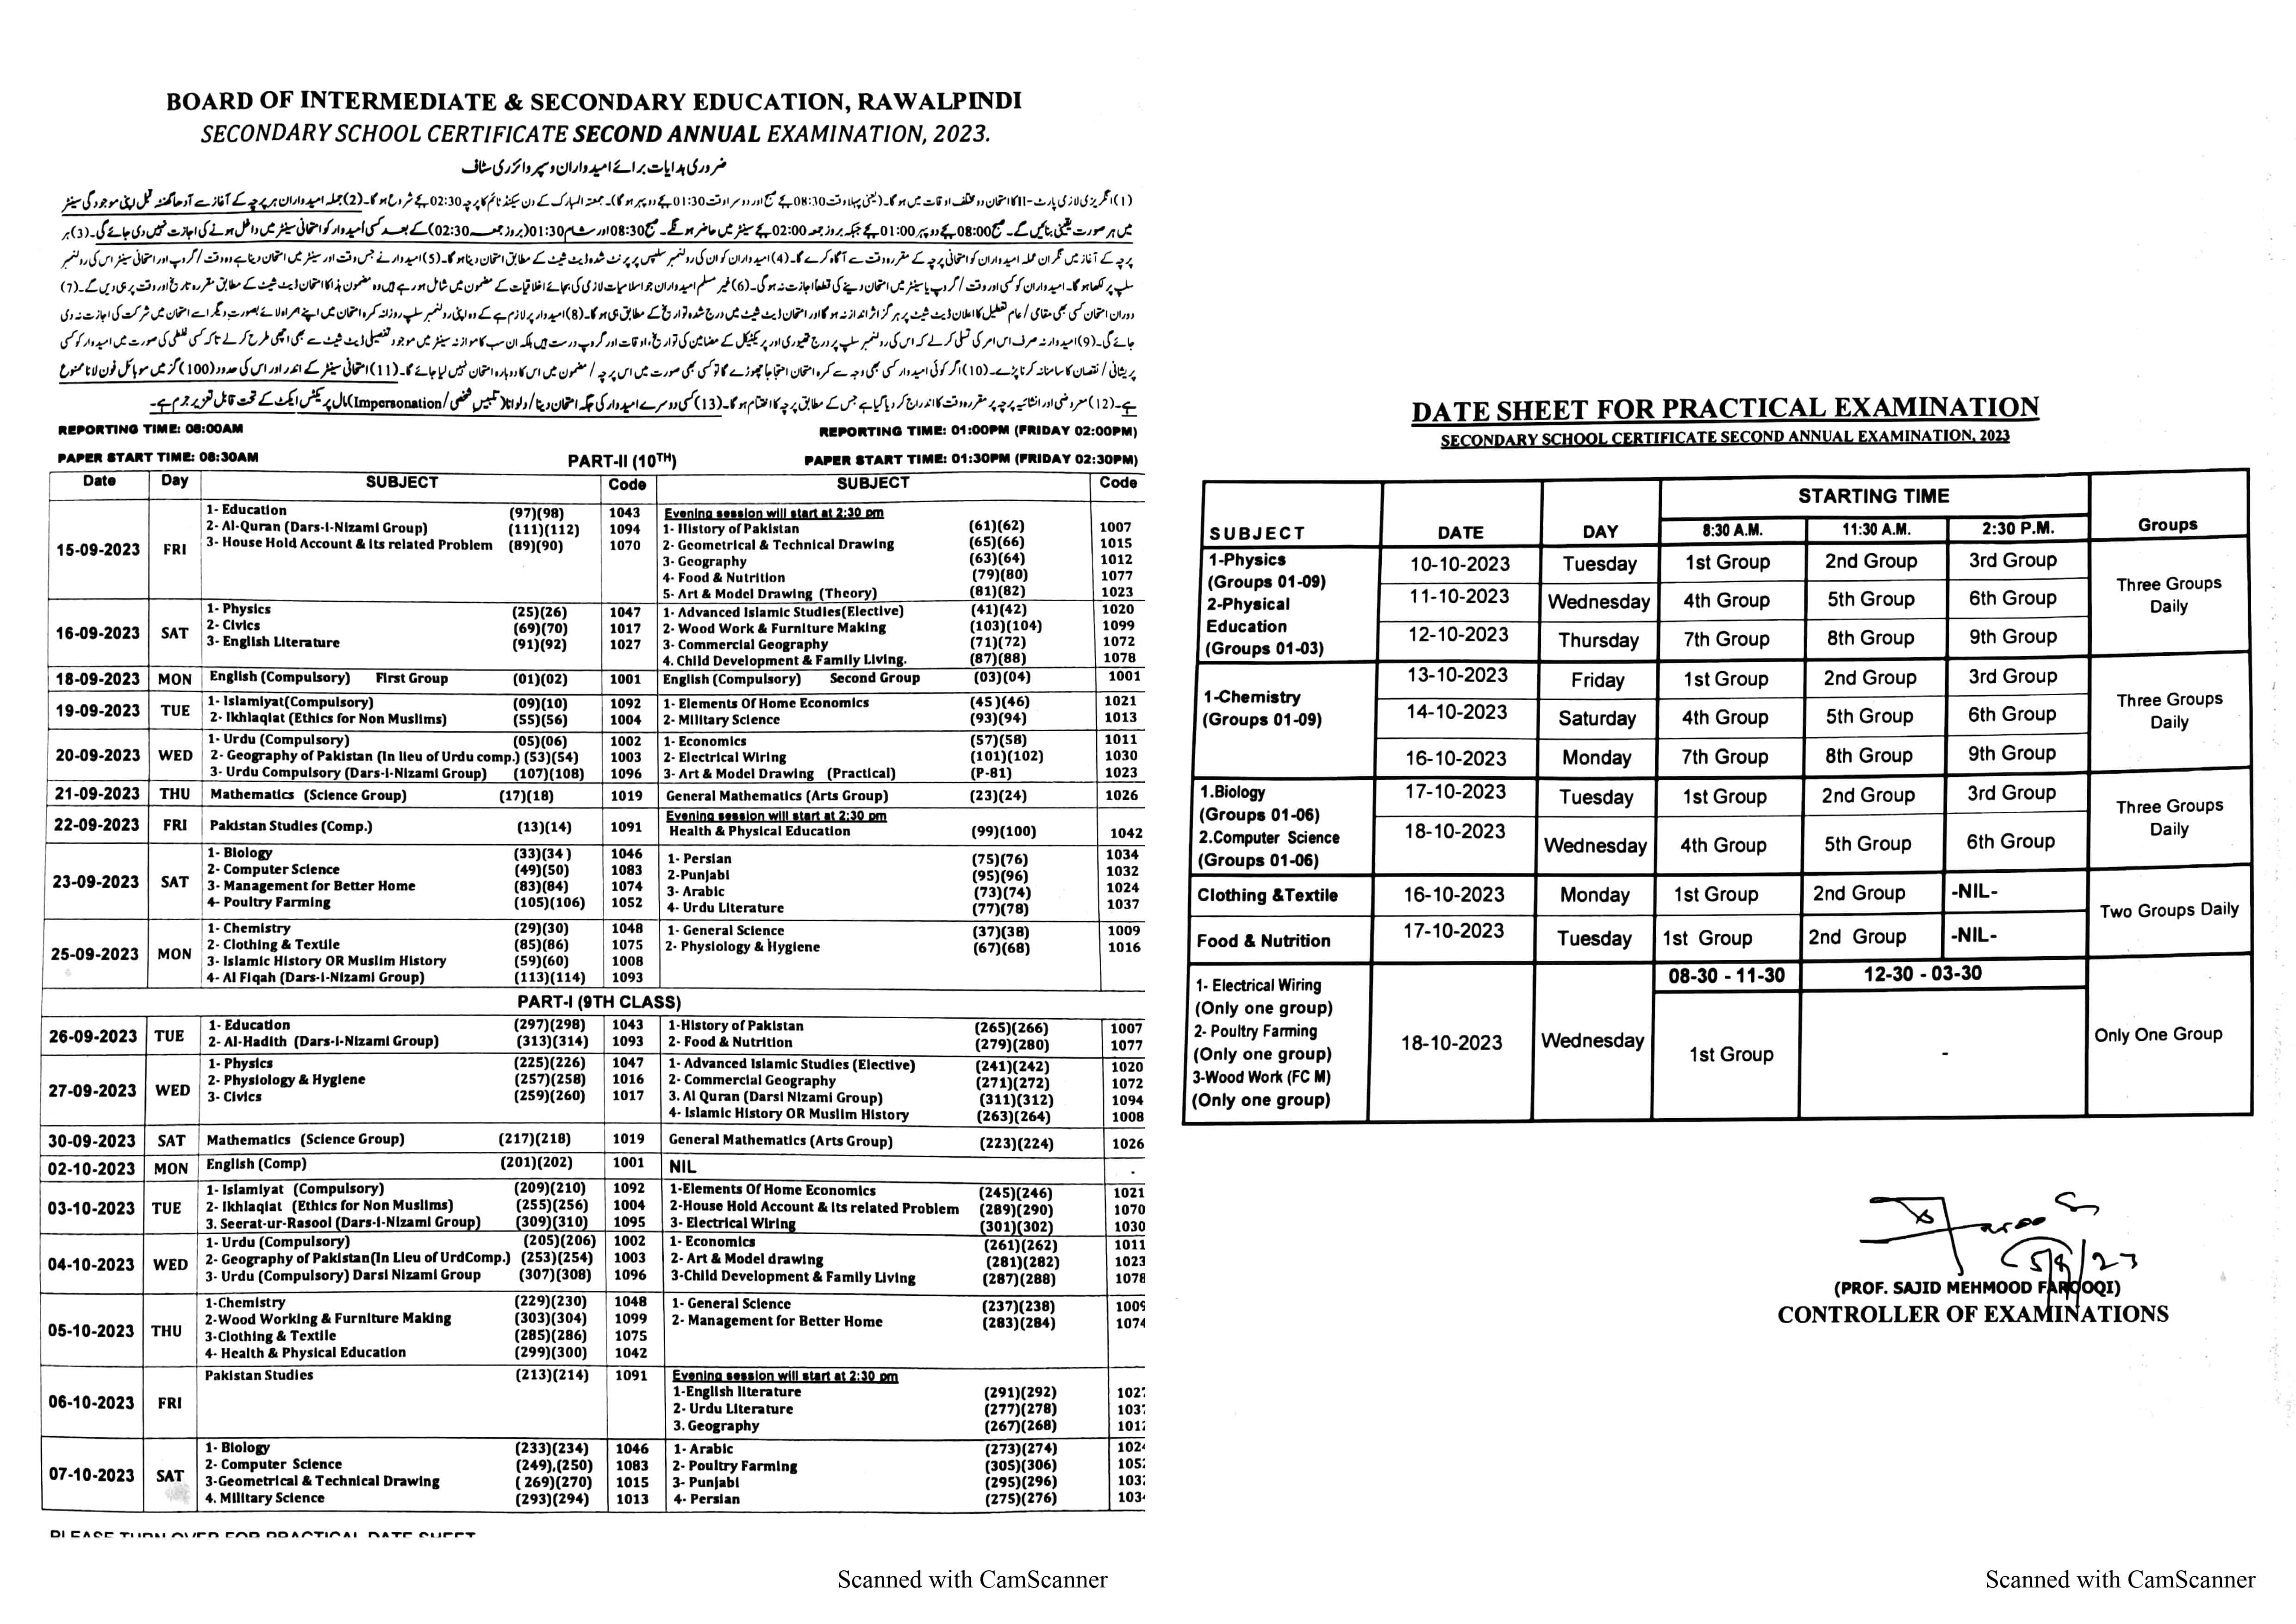 BISE Rawalpindi SSC Date Sheet 2023 2nd Annual